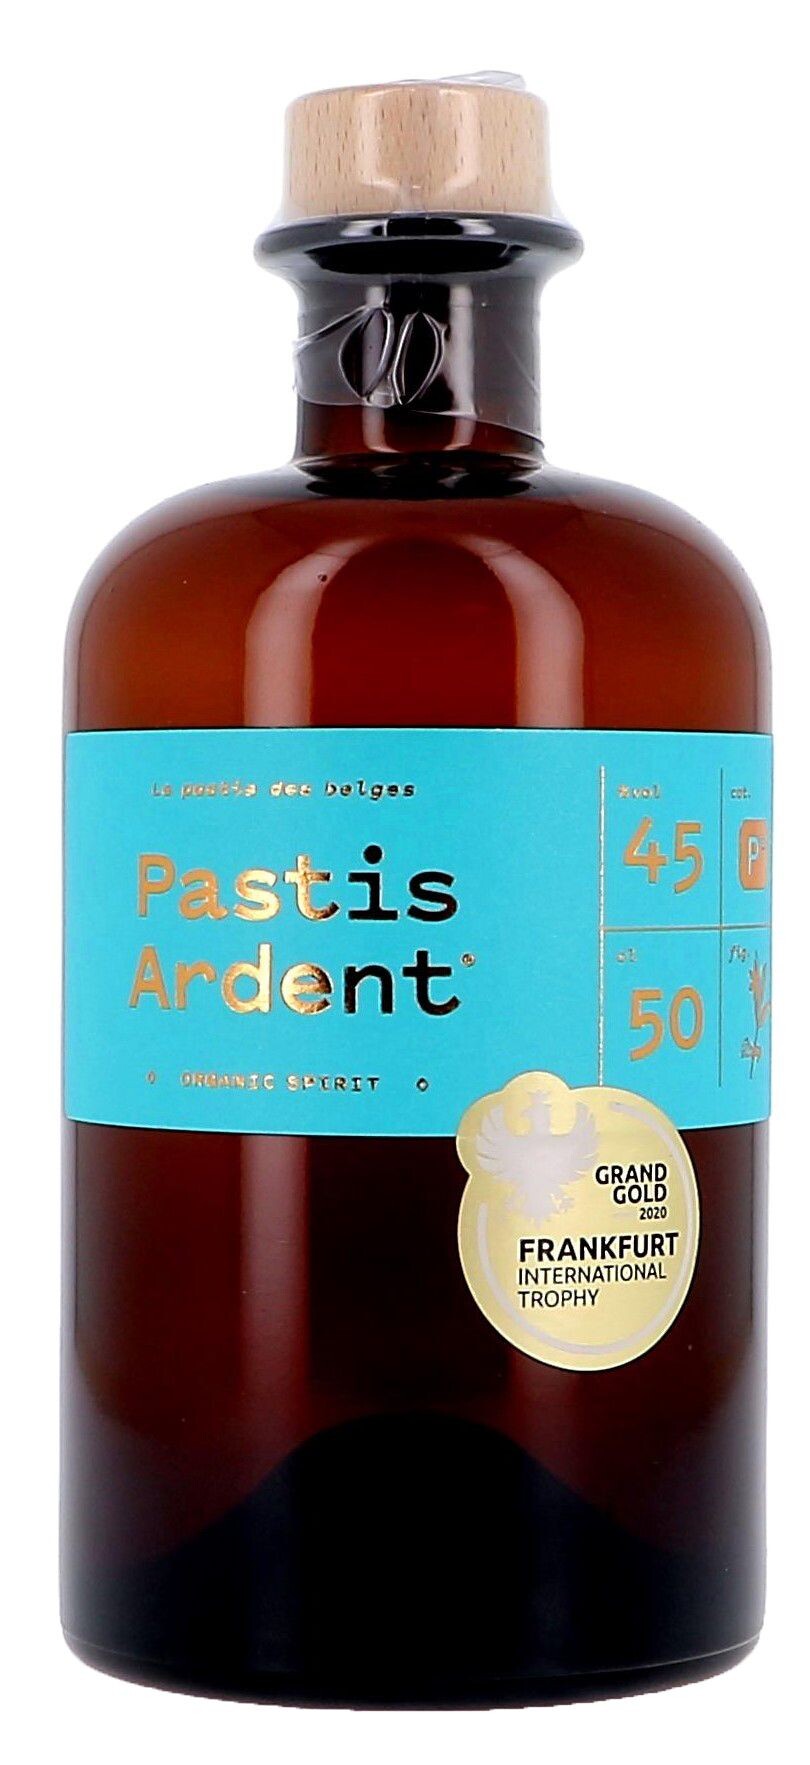 Pastis Ardent 50cl 45% Organic Spirit (Anijs & Pastis)